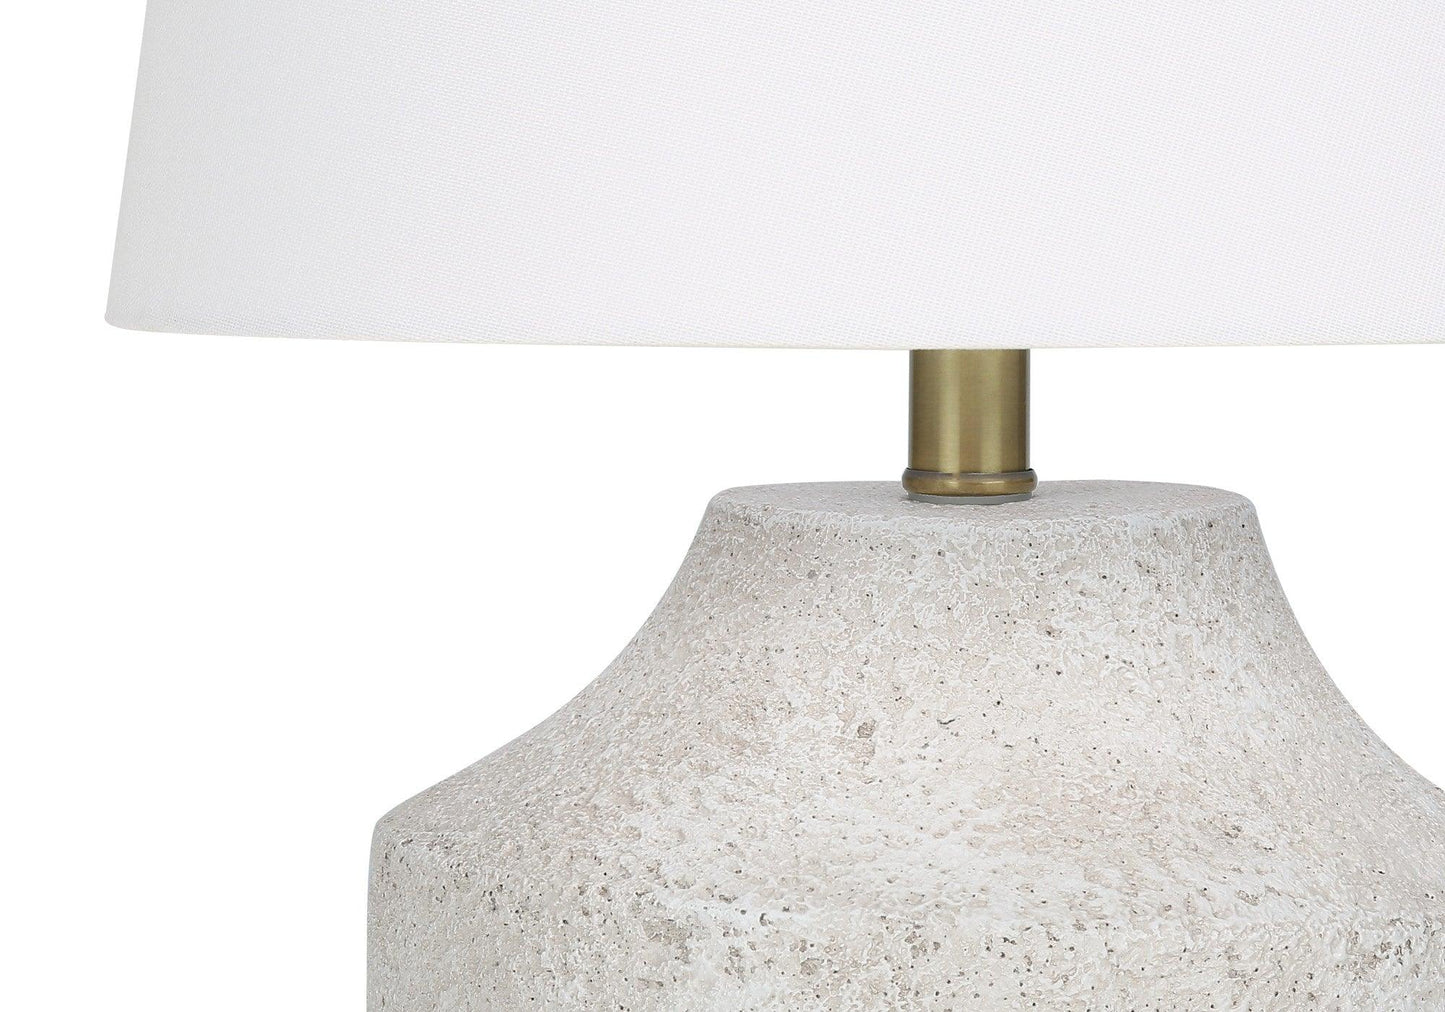 20" Cream Concrete Urn Table Lamp With Cream Empire Shade - FurniFindUSA